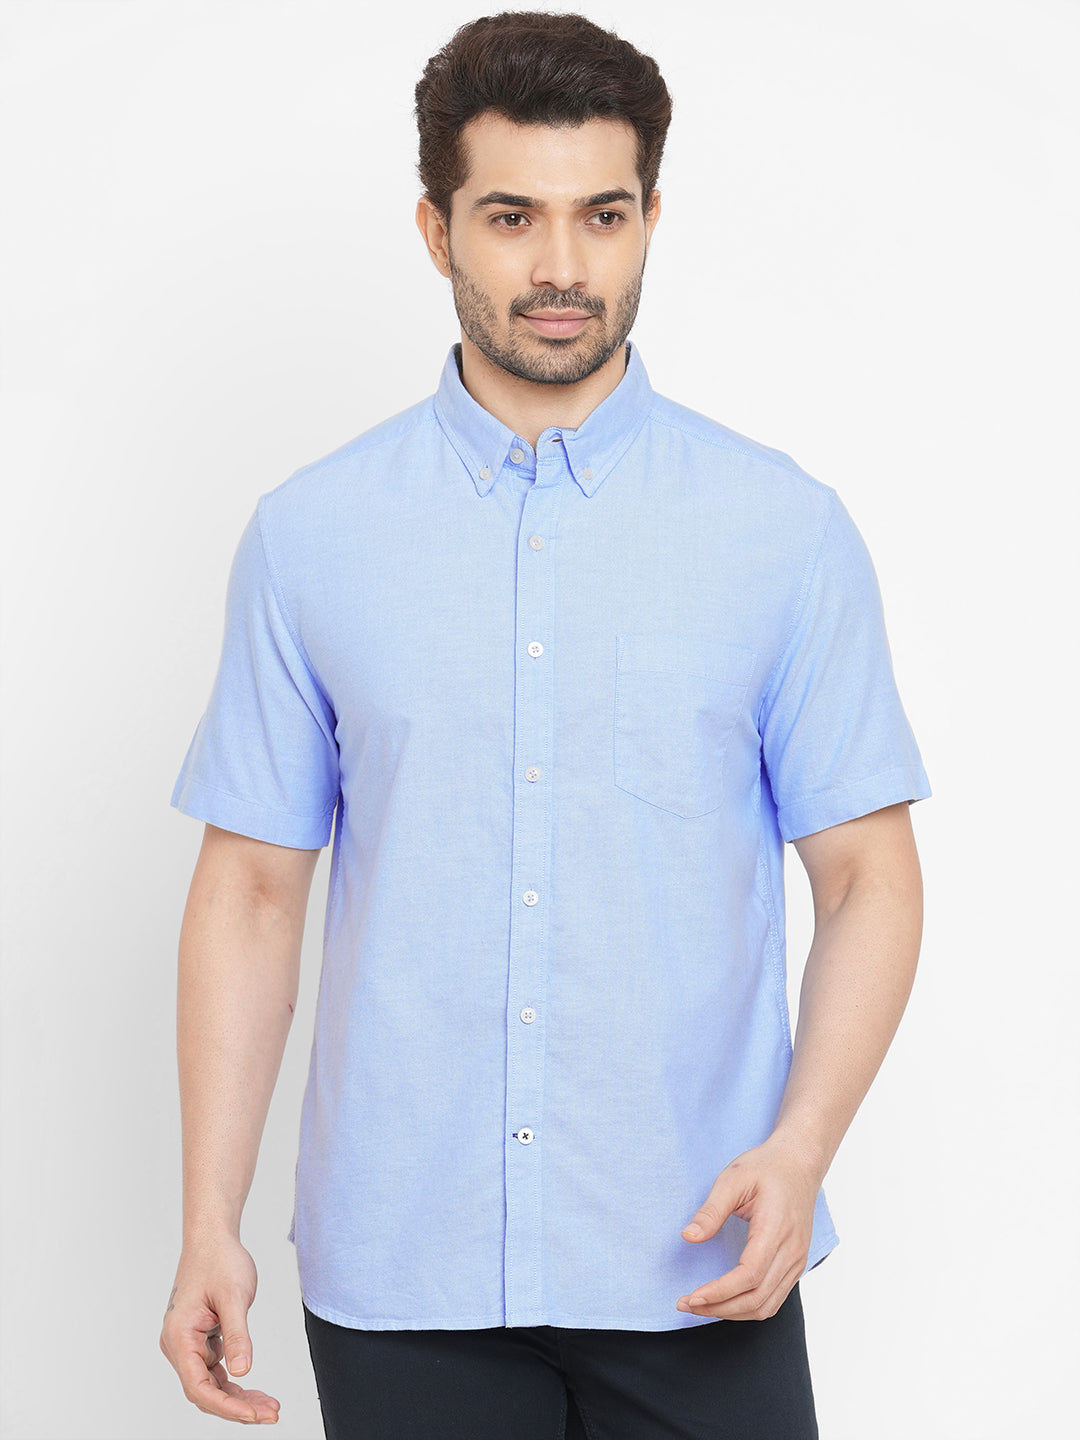 Men's Oxford Cotton Button Down Collar Short Sleeved Shirt - Blue